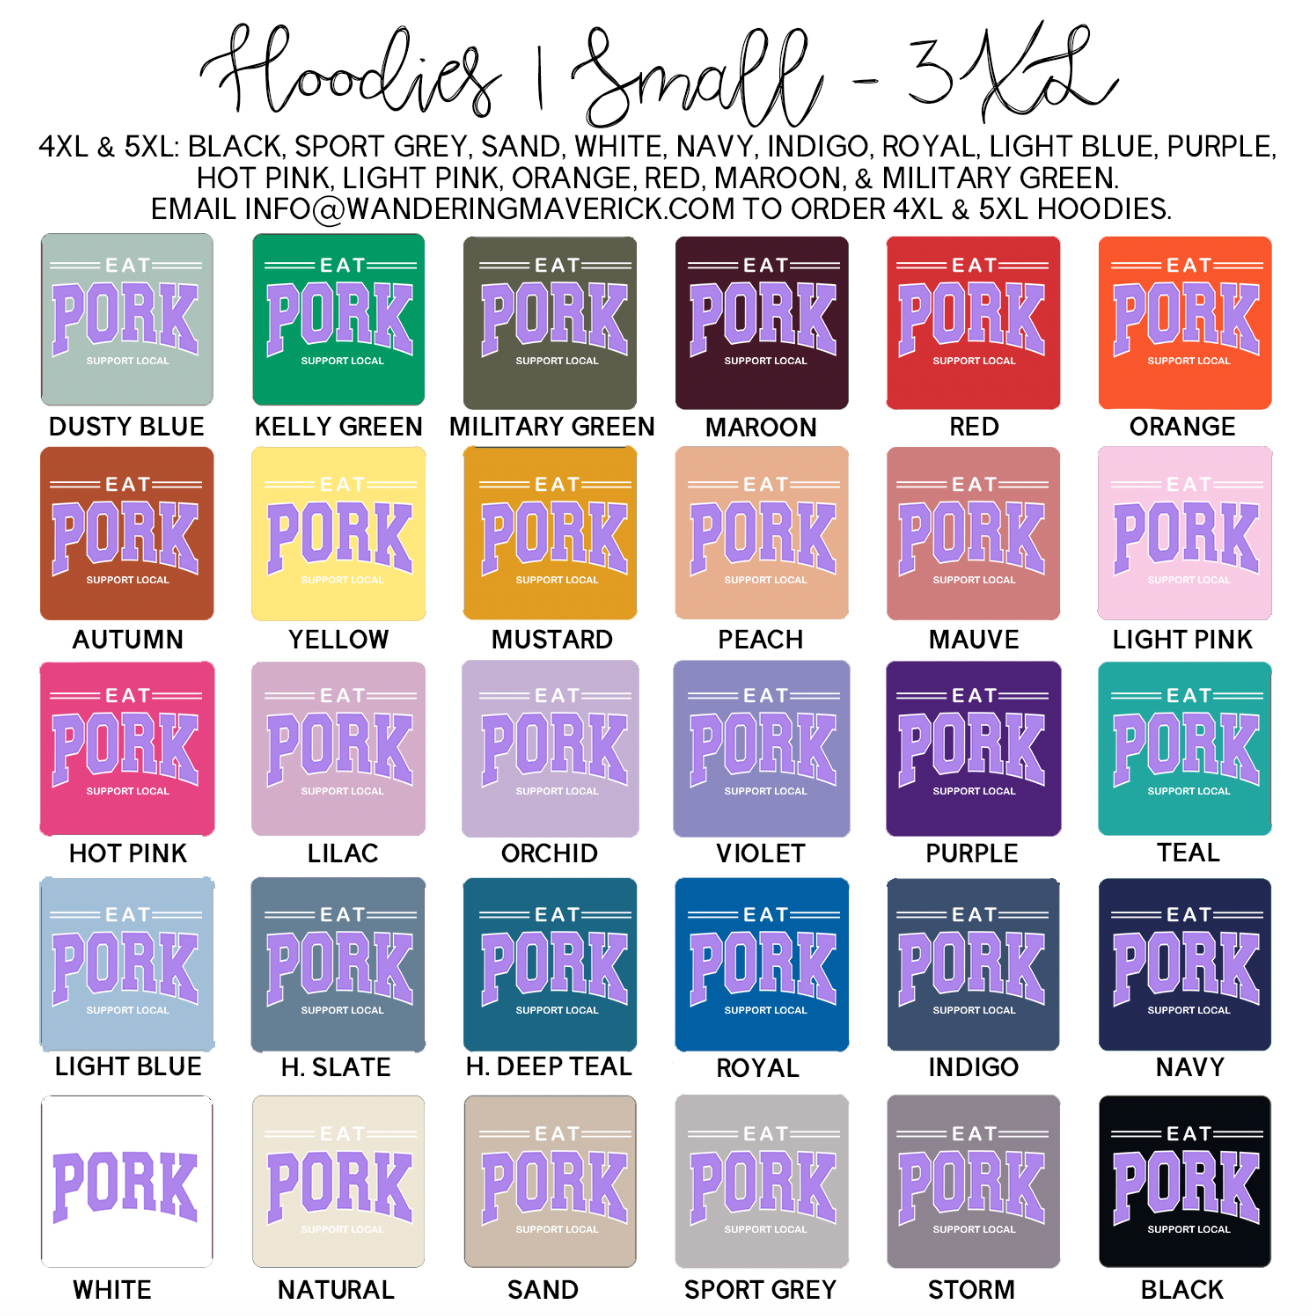 Eat Pork Support Local PURPLE Hoodie (S-3XL) Unisex - Multiple Colors!